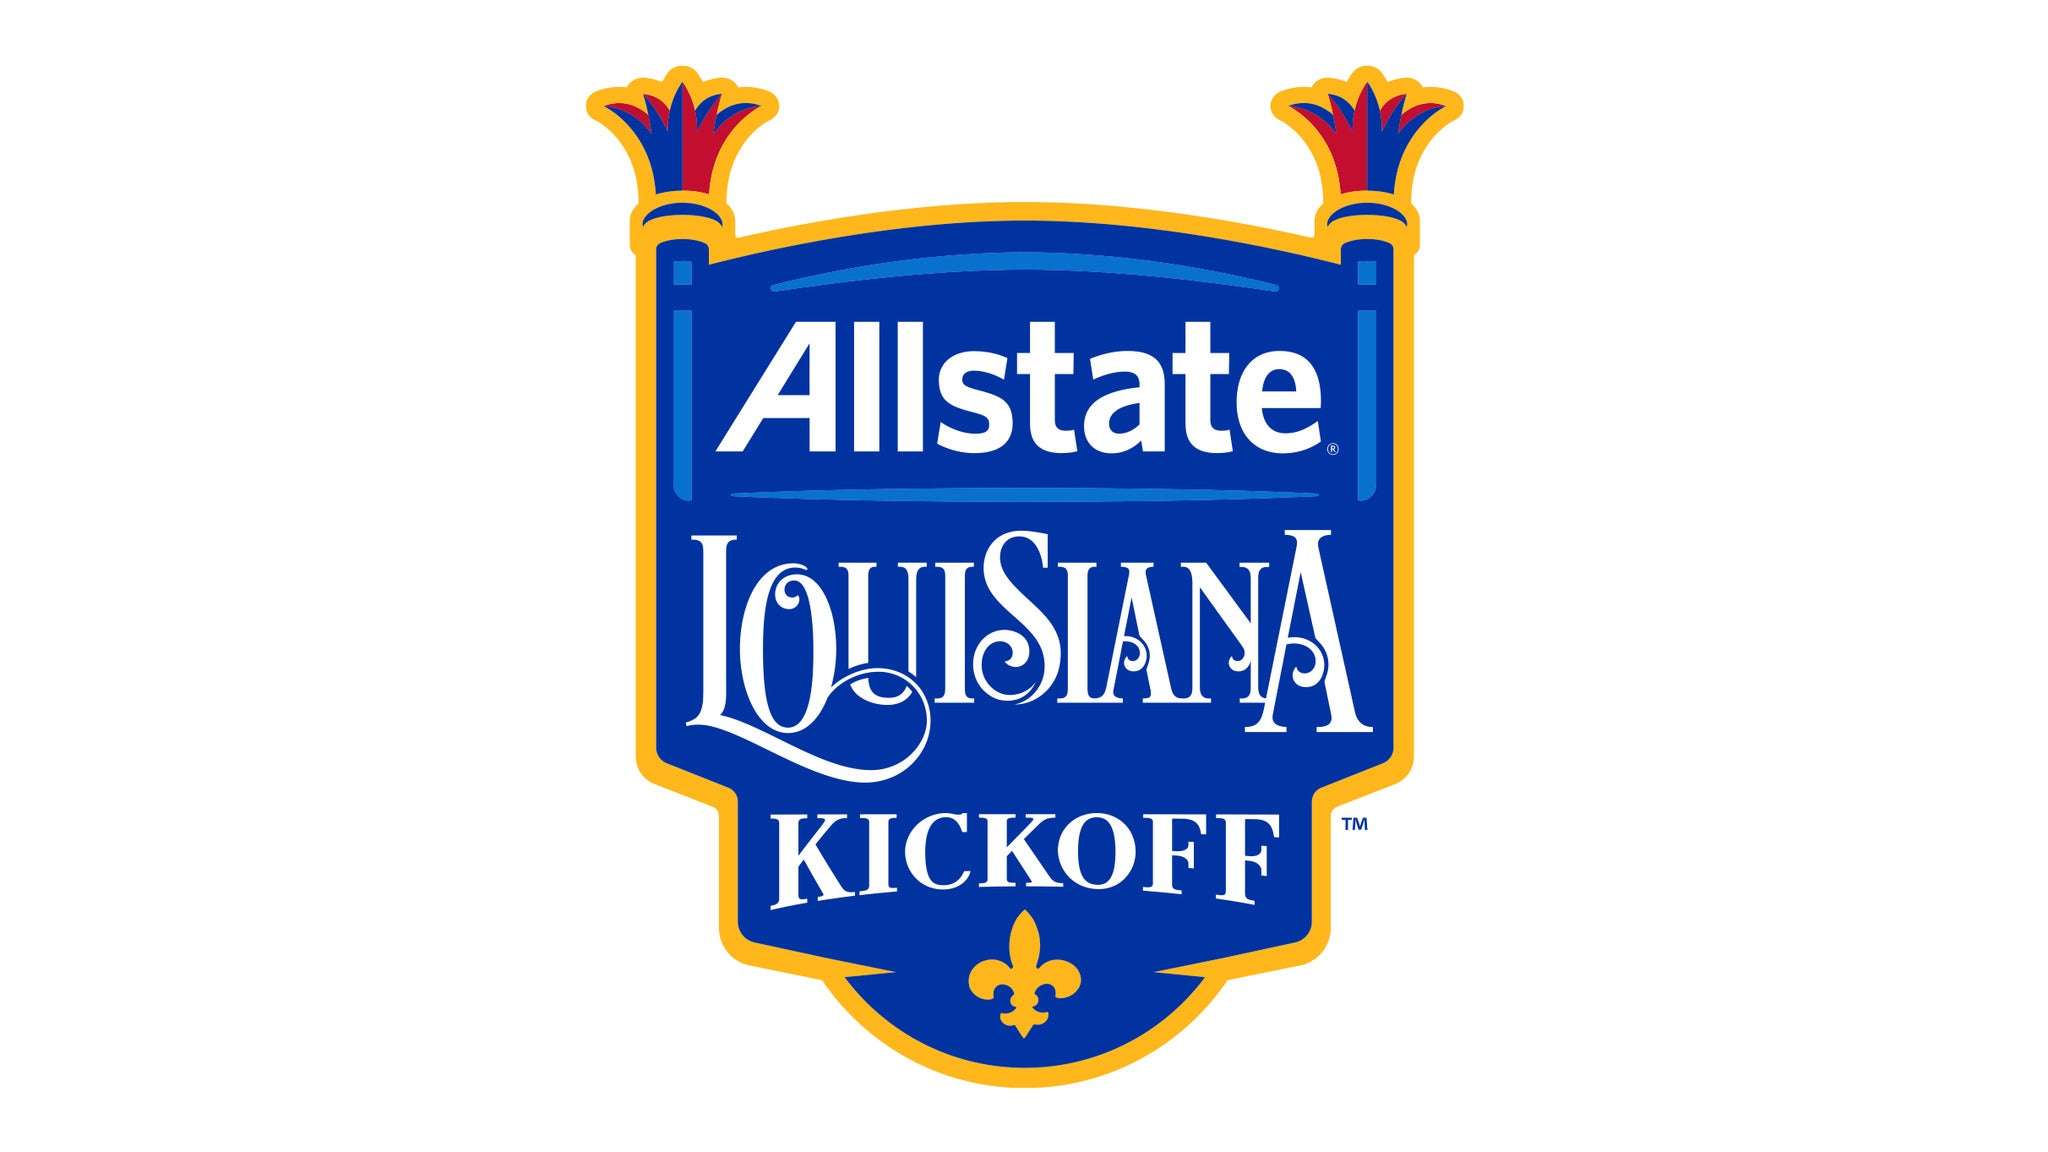 Allstate Louisiana Kickoff Tickets Single Game Tickets & Schedule